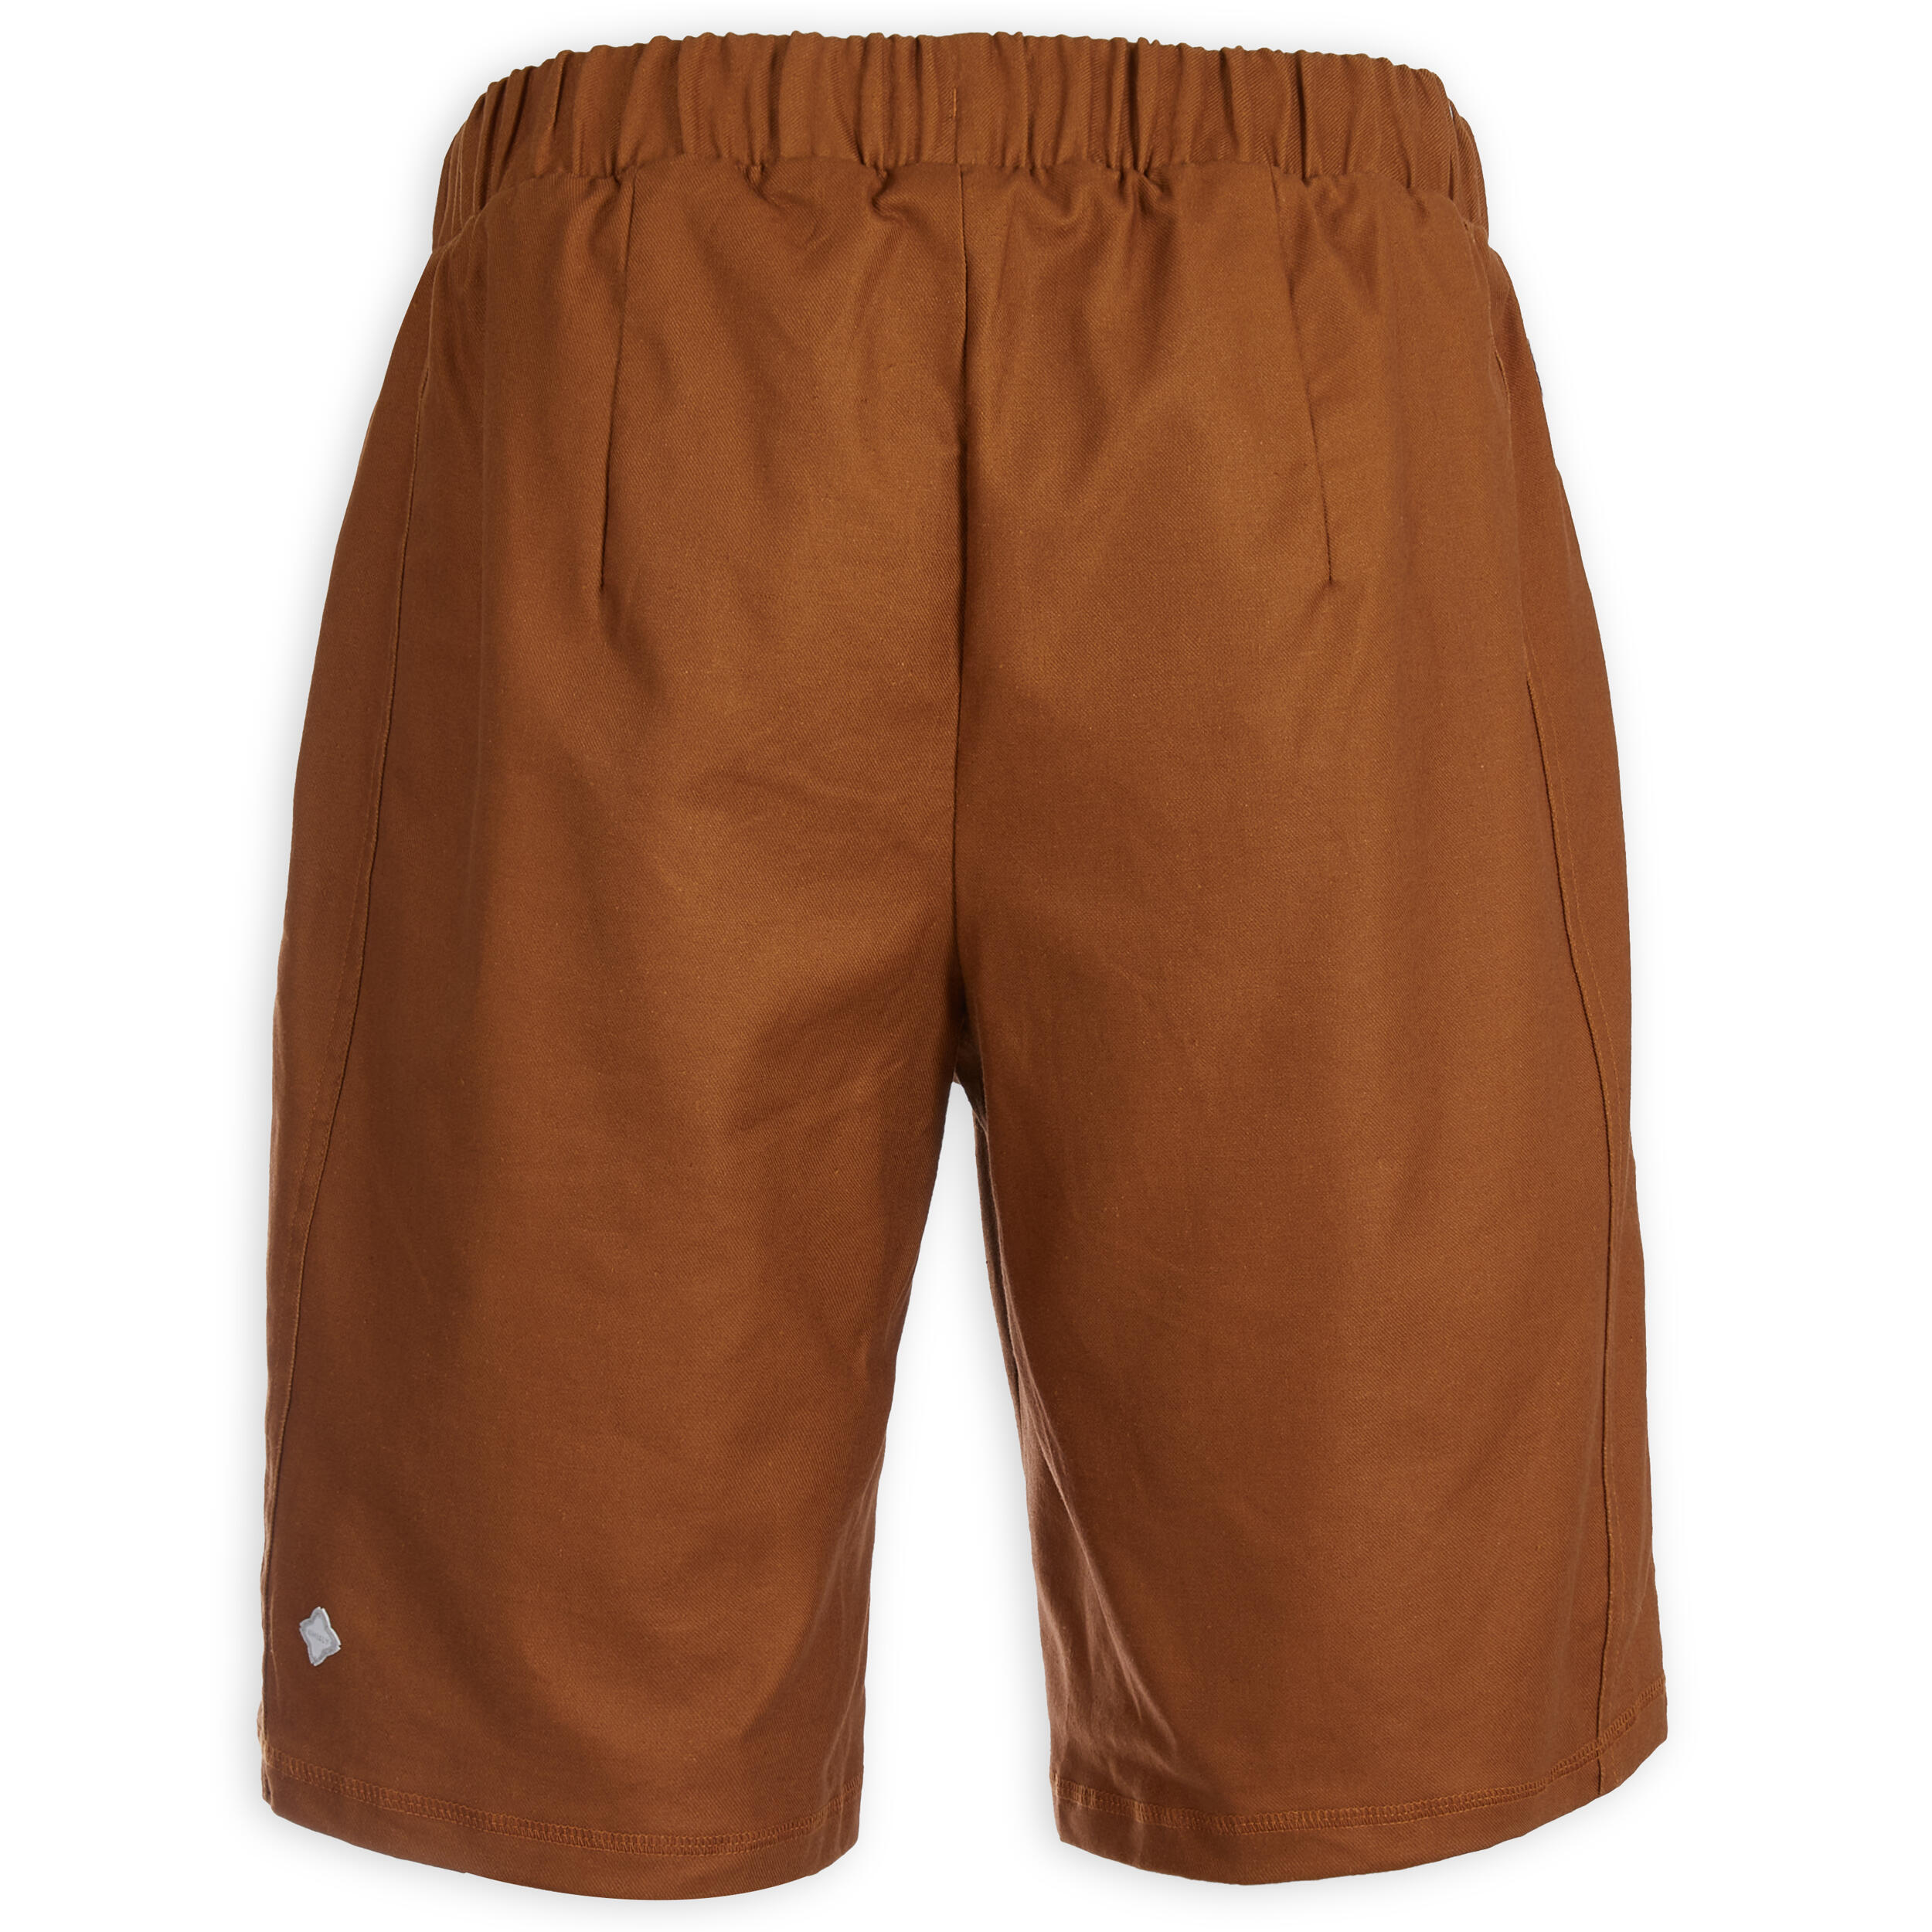 Men's Yoga Linen and Cotton Shorts - Brown 6/6